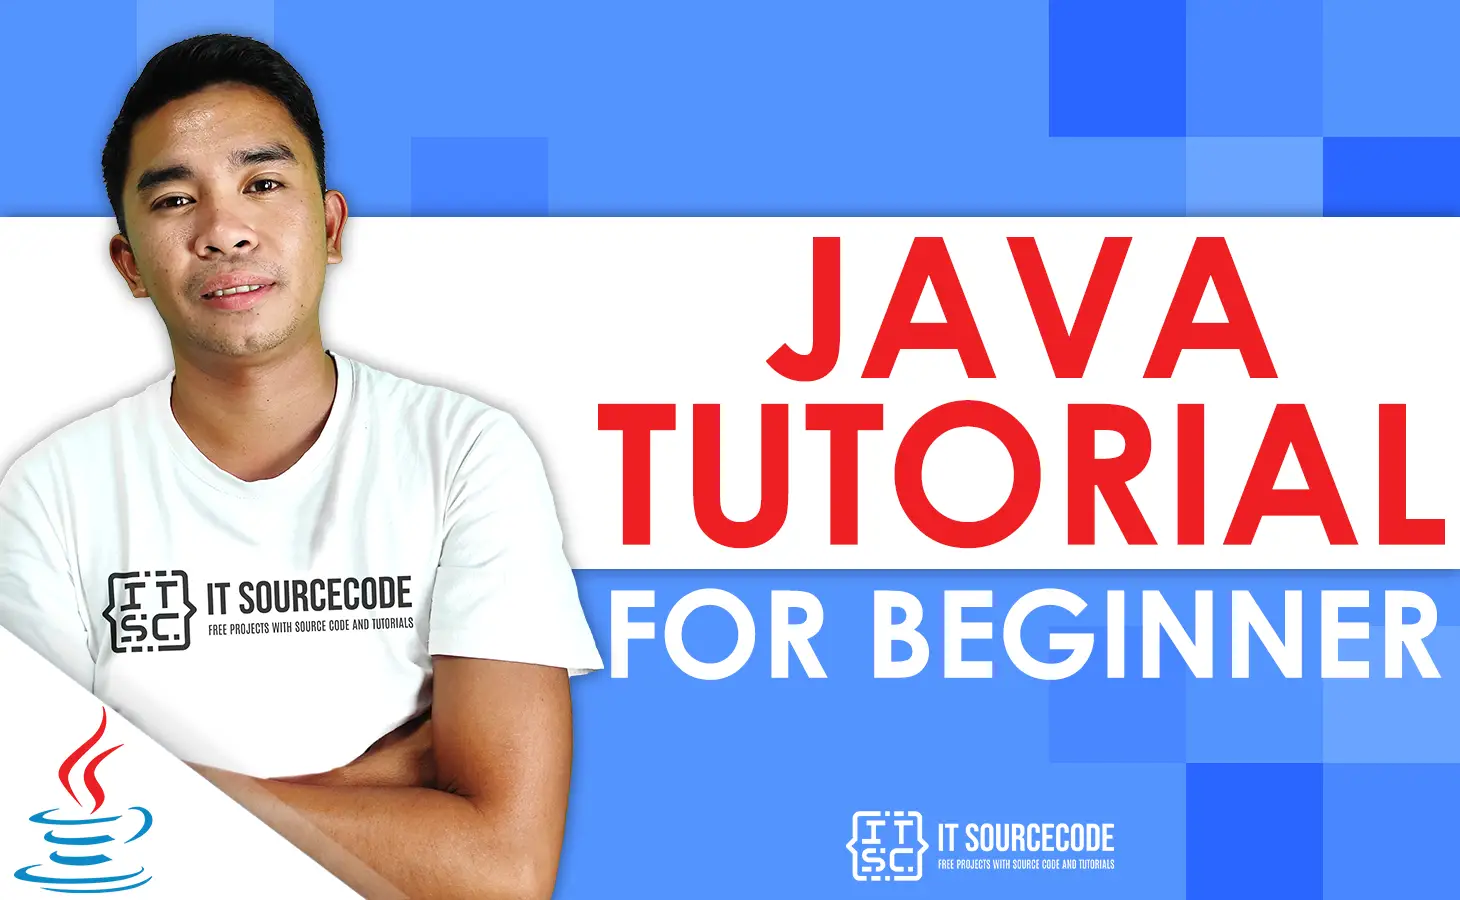 Java Tutorial For Beginner